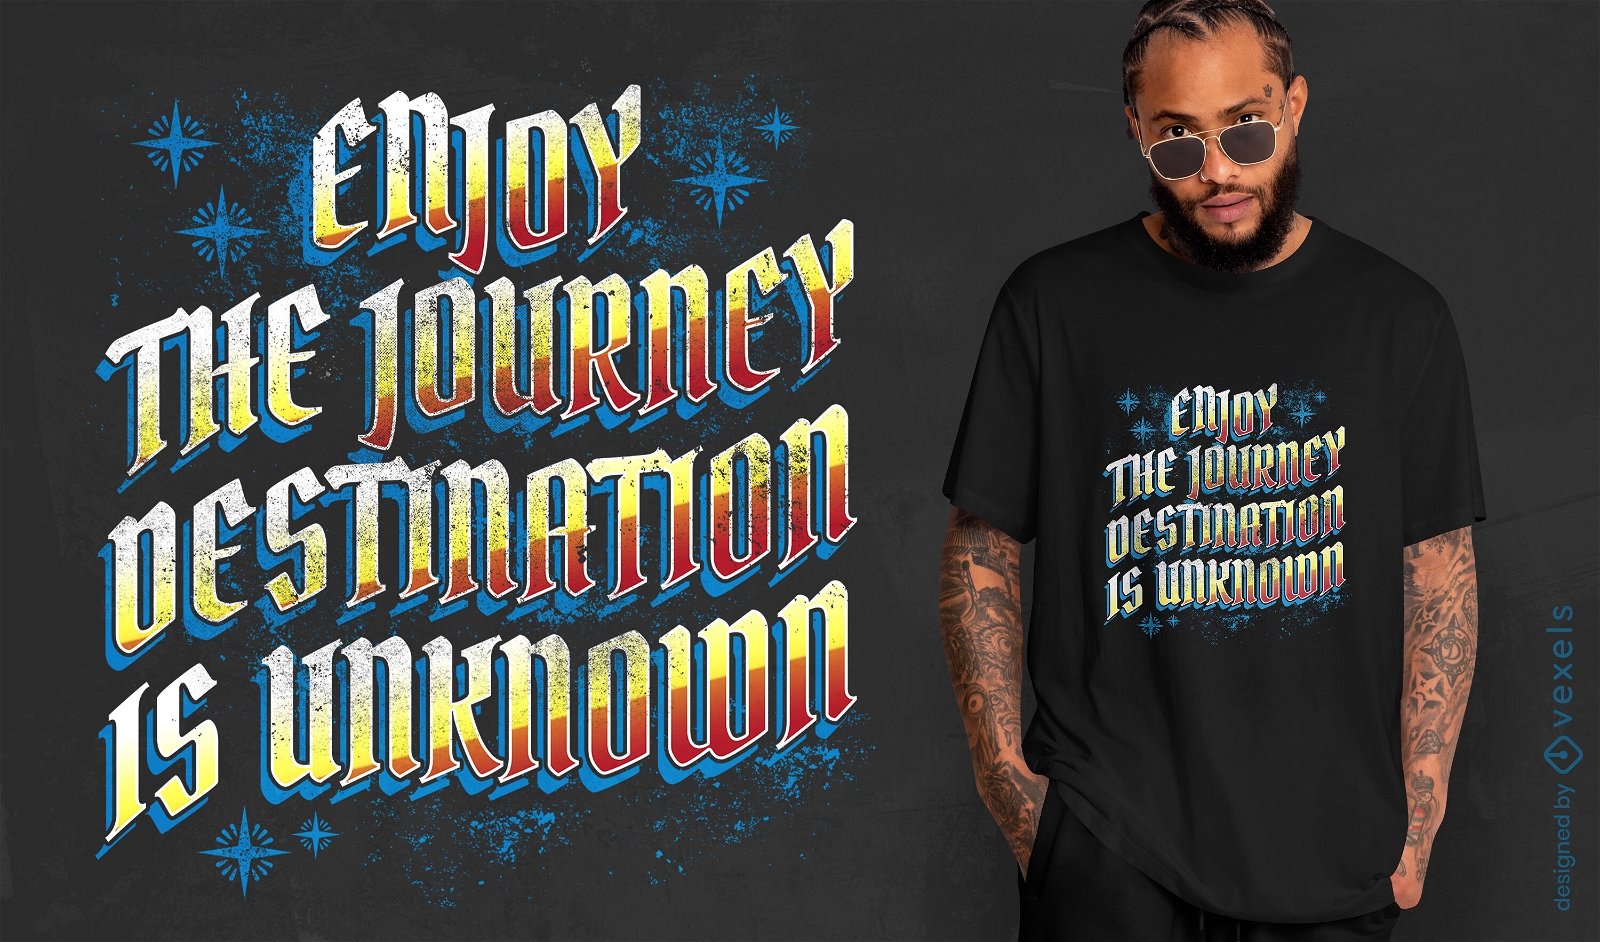 Ejoy the journey quote t-shirt design